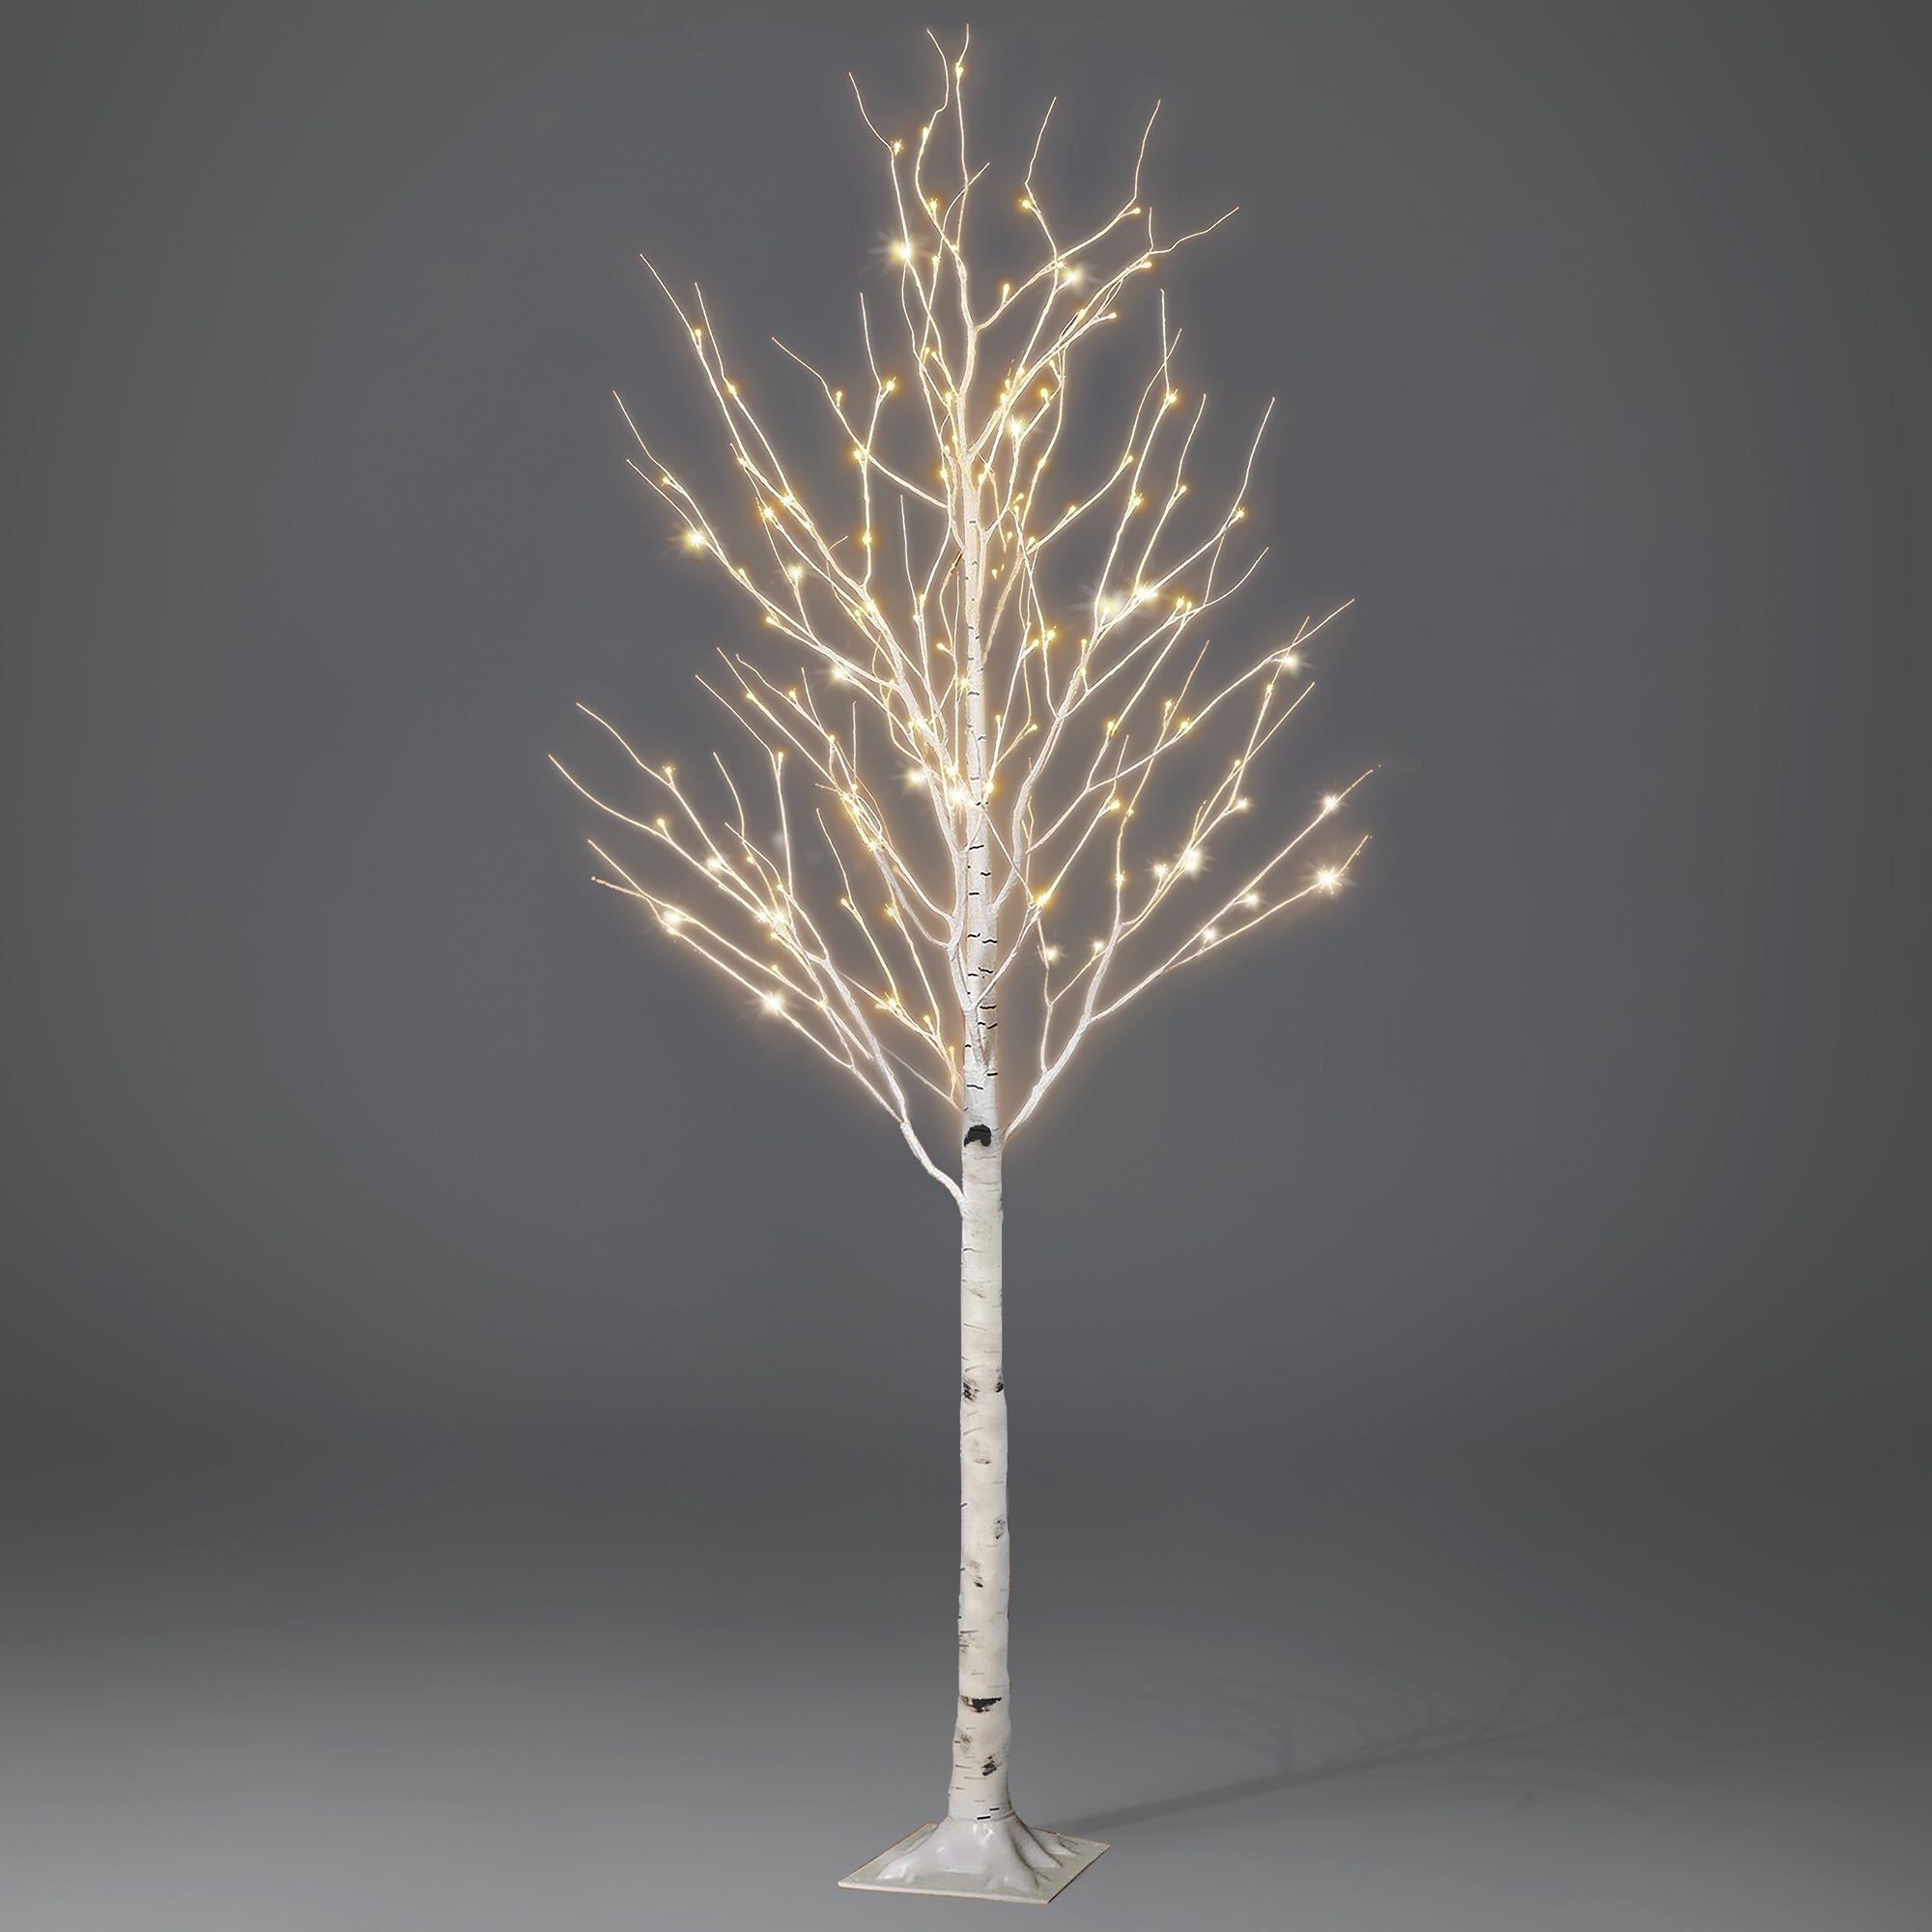 NETTA 5FT Pre-Lit Birch Tree with Warm White LEDs - White